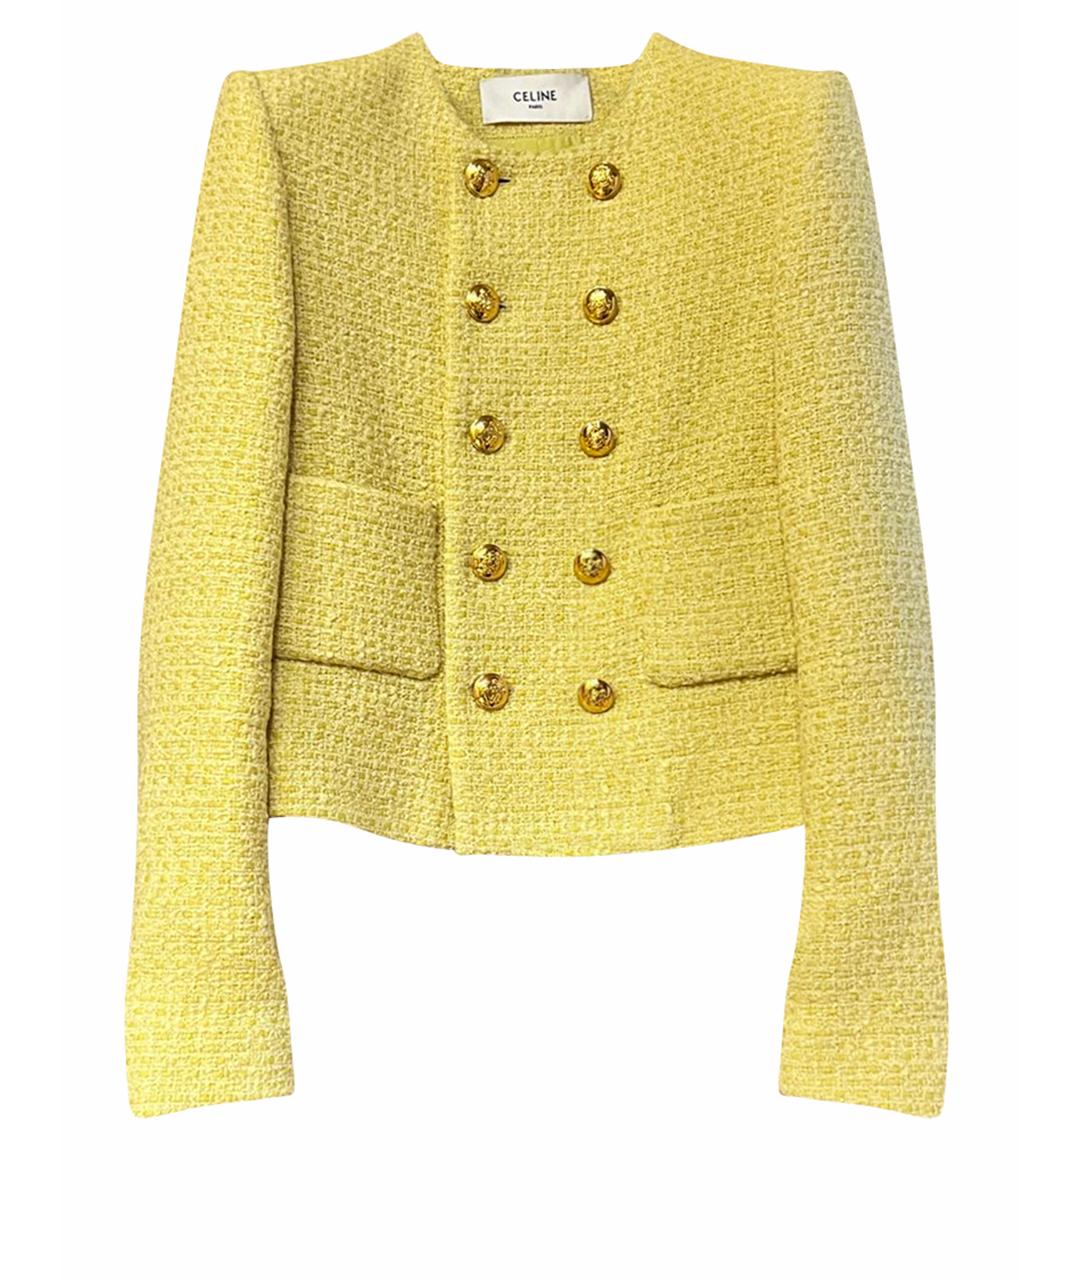 CELINE PRE-OWNED Желтый шерстяной жакет/пиджак, фото 1